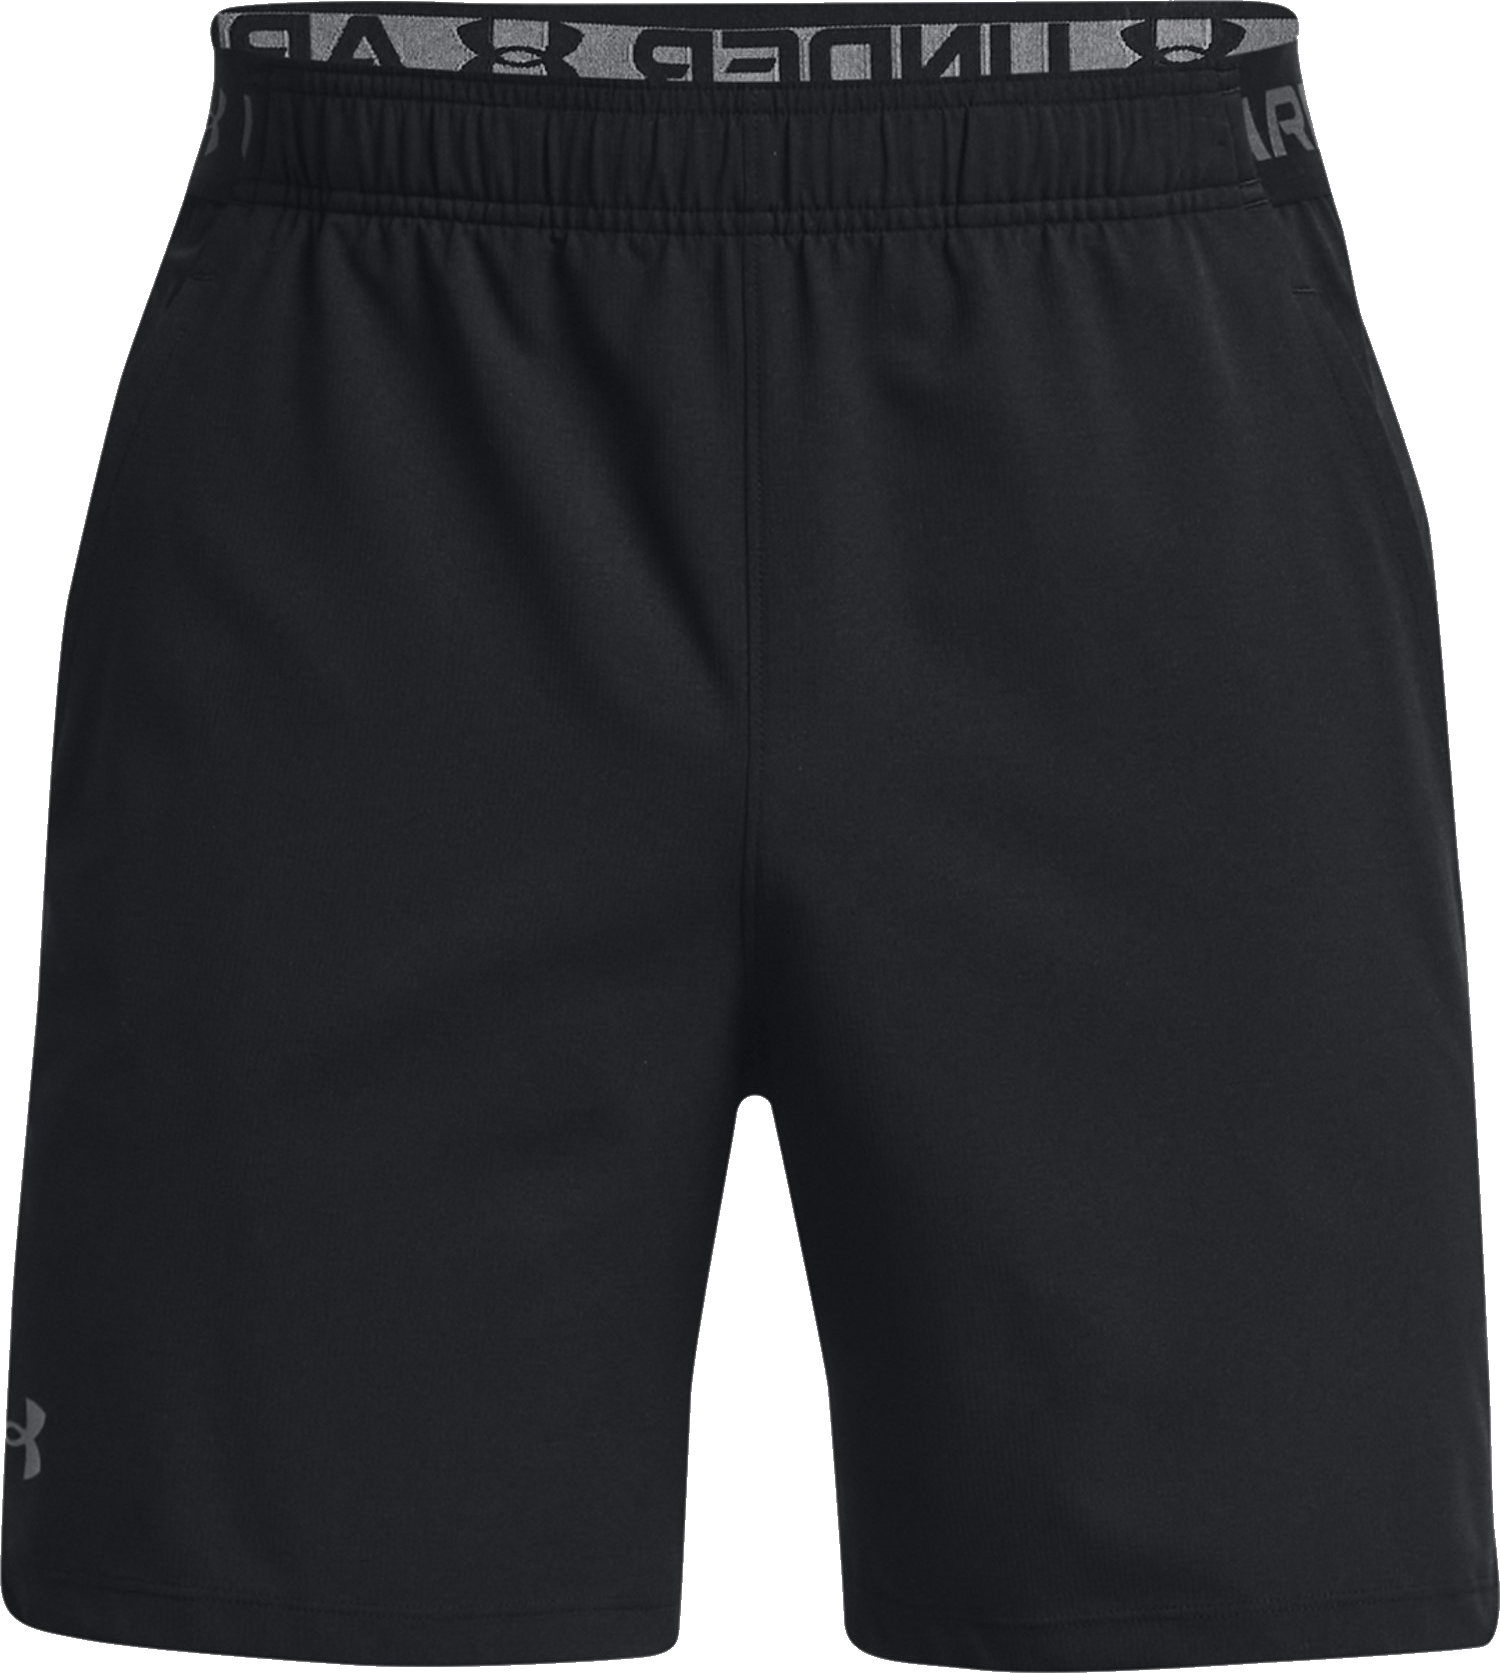 Men's UA Vanish Woven 6in Shorts Black/Pitch Grey